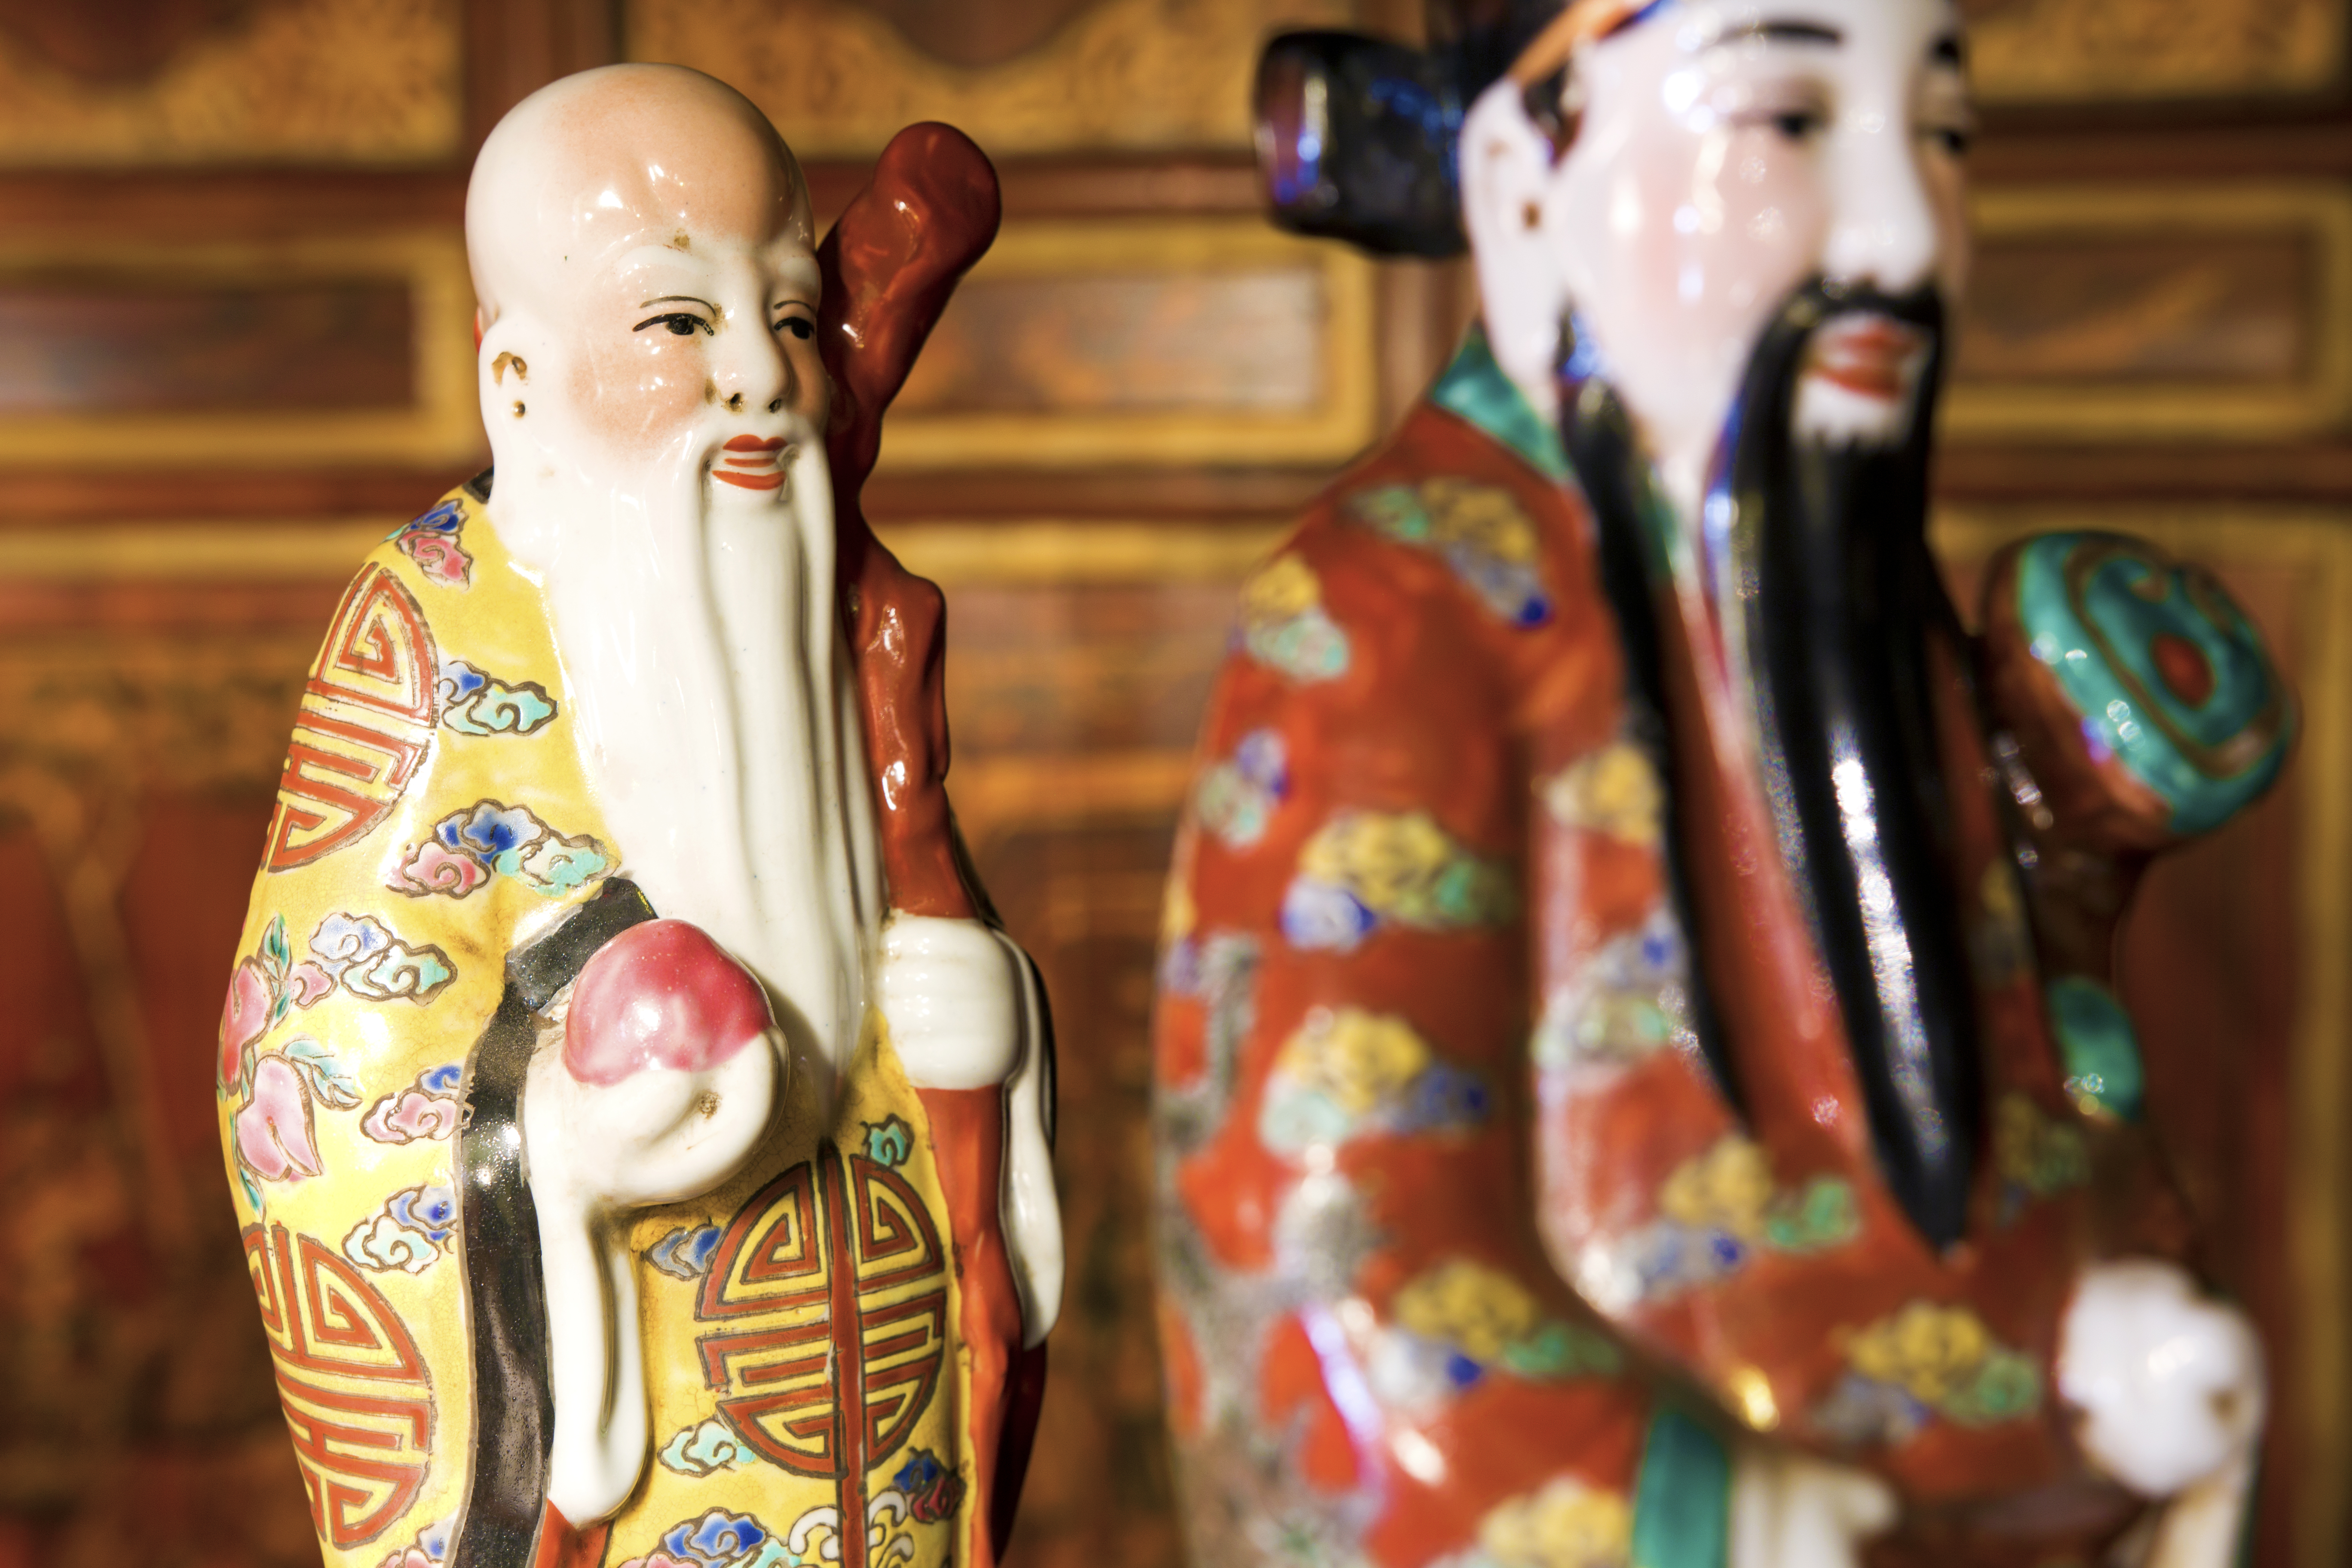 Chinese Sanxing Statues - Three Gods